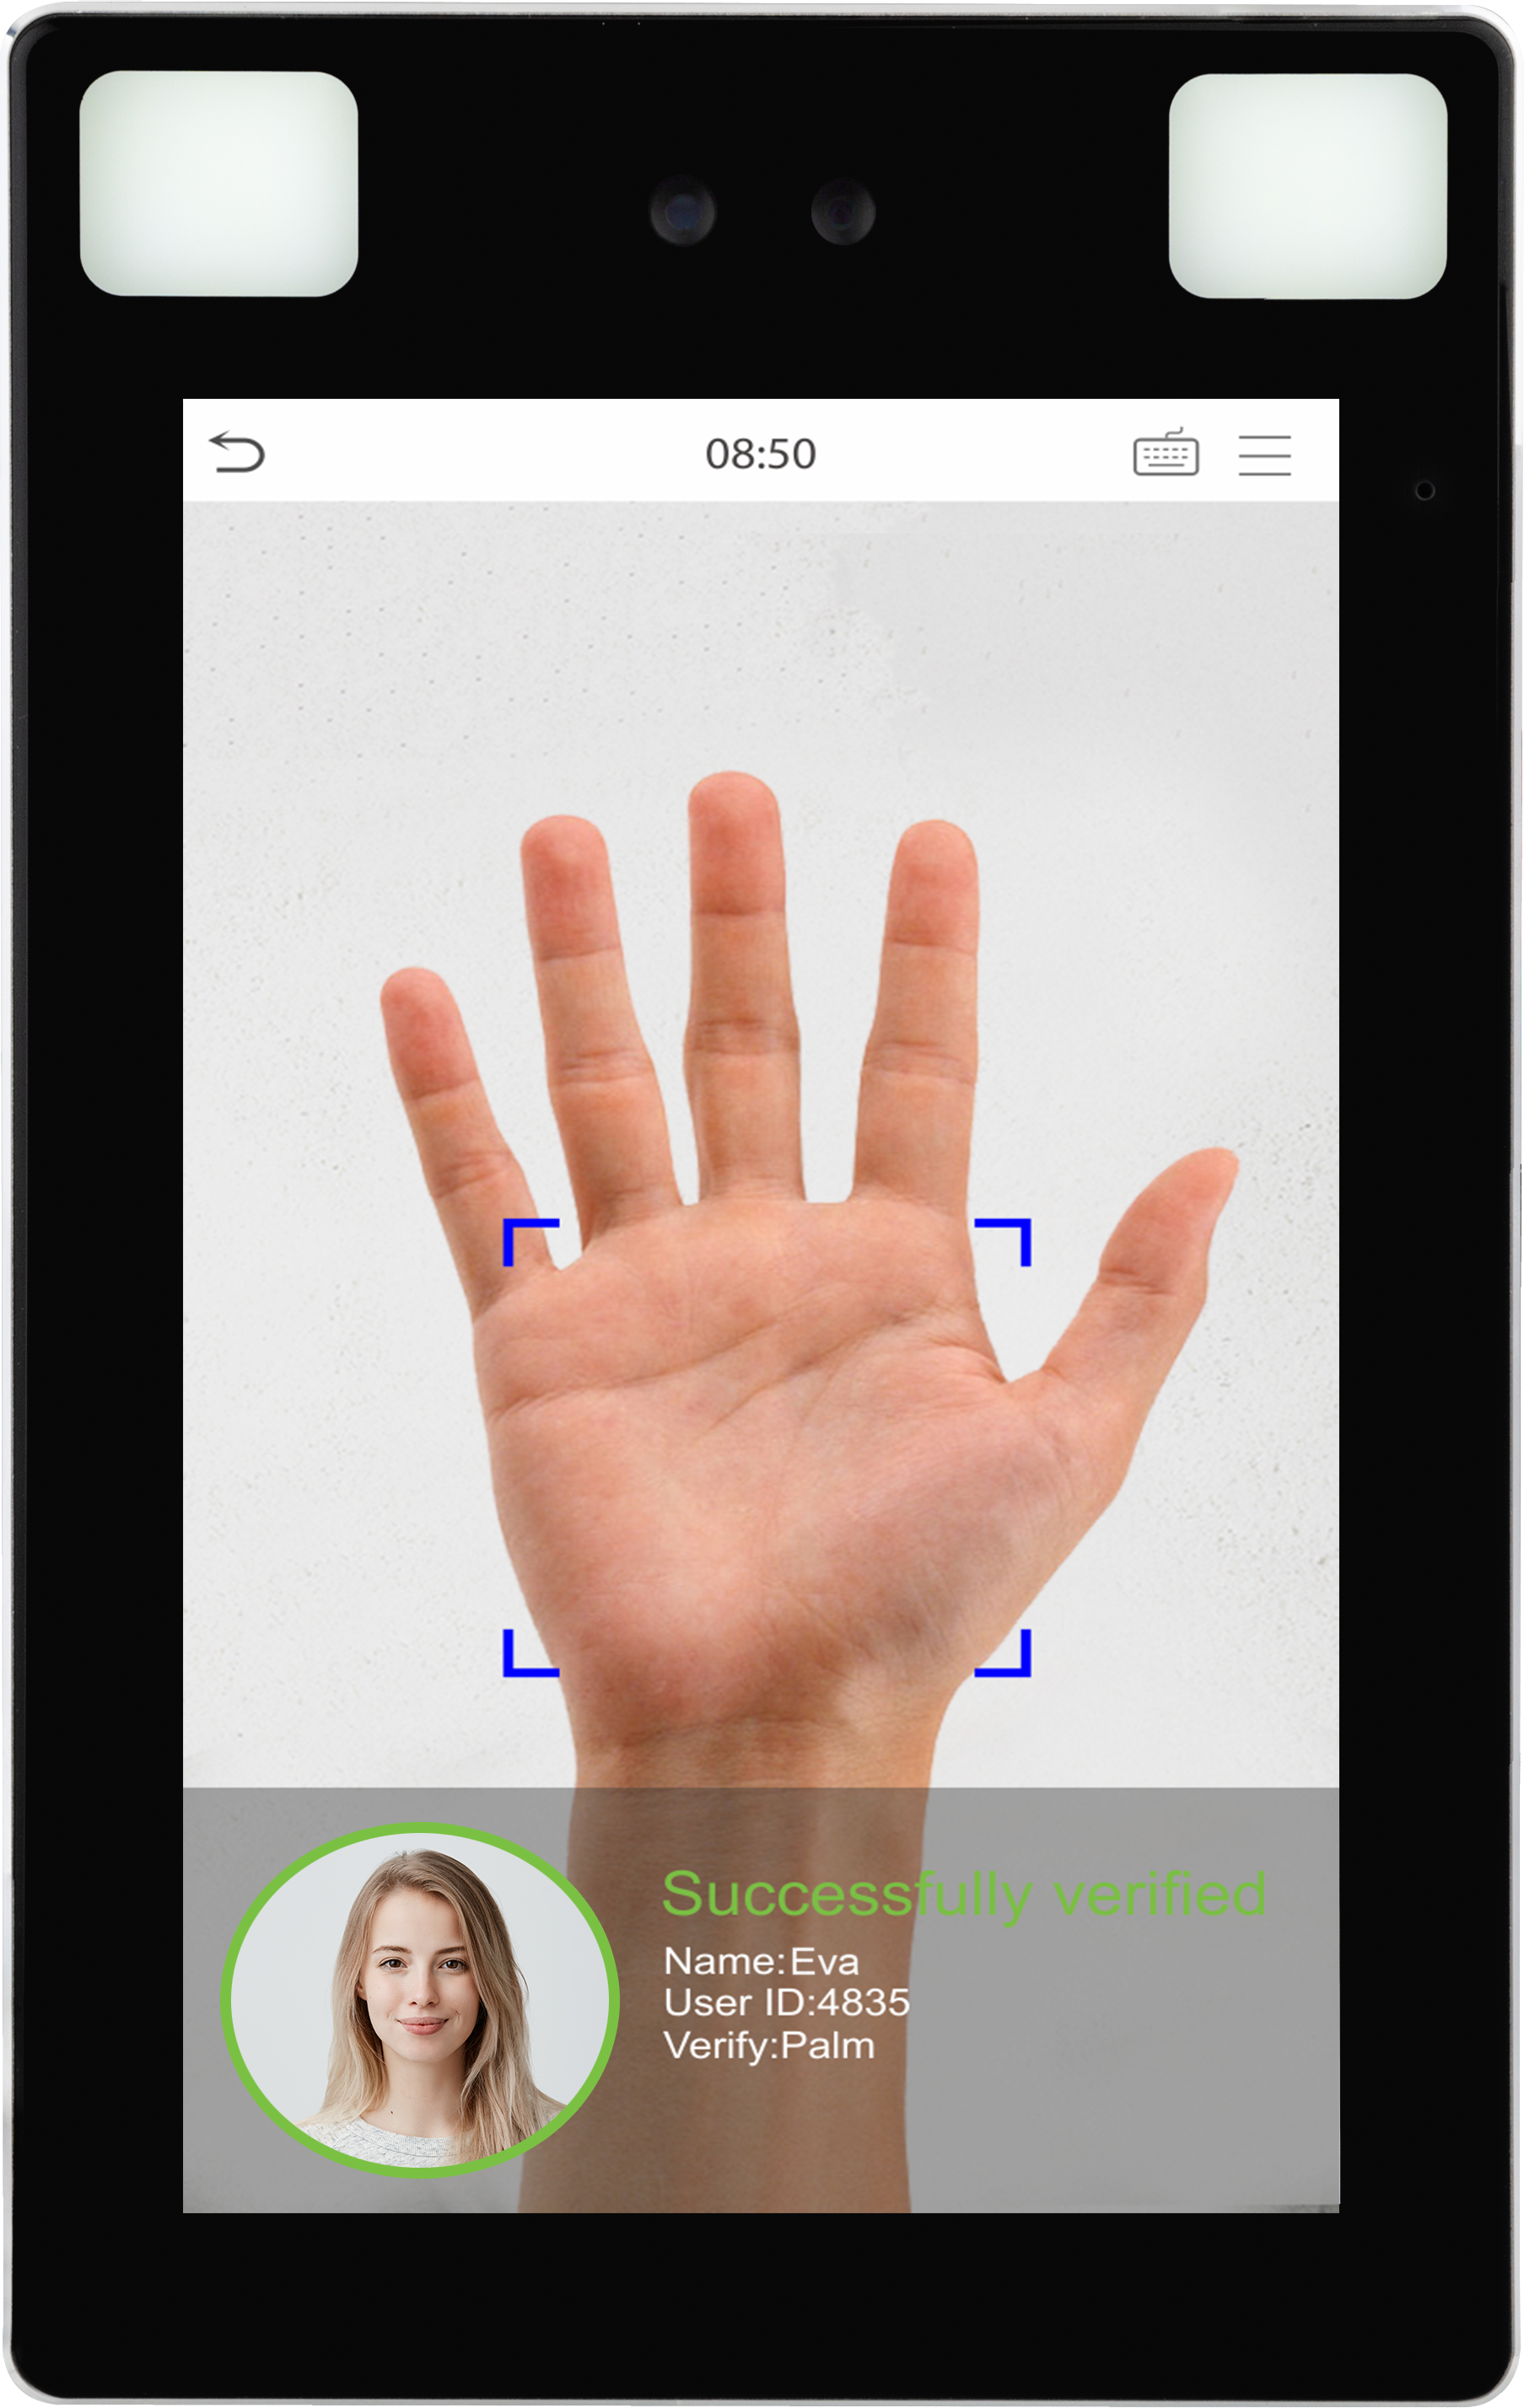 ProFace X P BioOnCard is a Double Verification RFID Biometrics Solution for Access Control